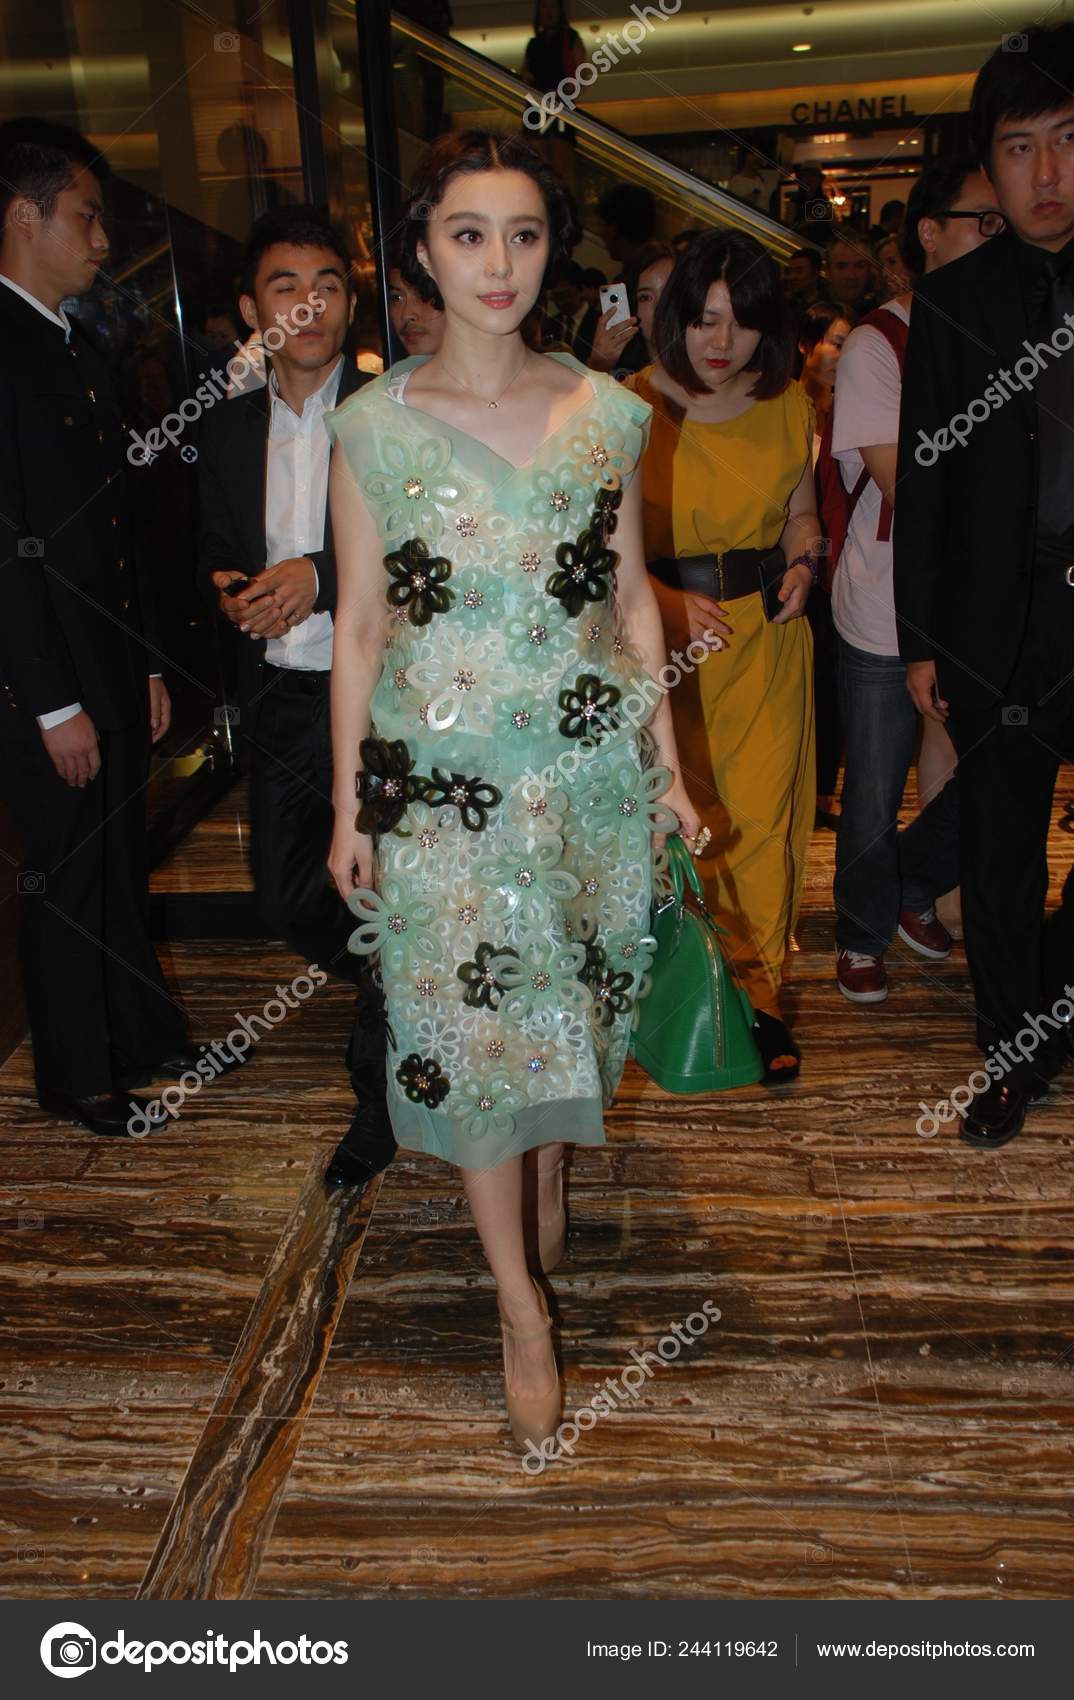 Louis Vuitton Maison Seoul Opening - Red Carpet Fashion Awards